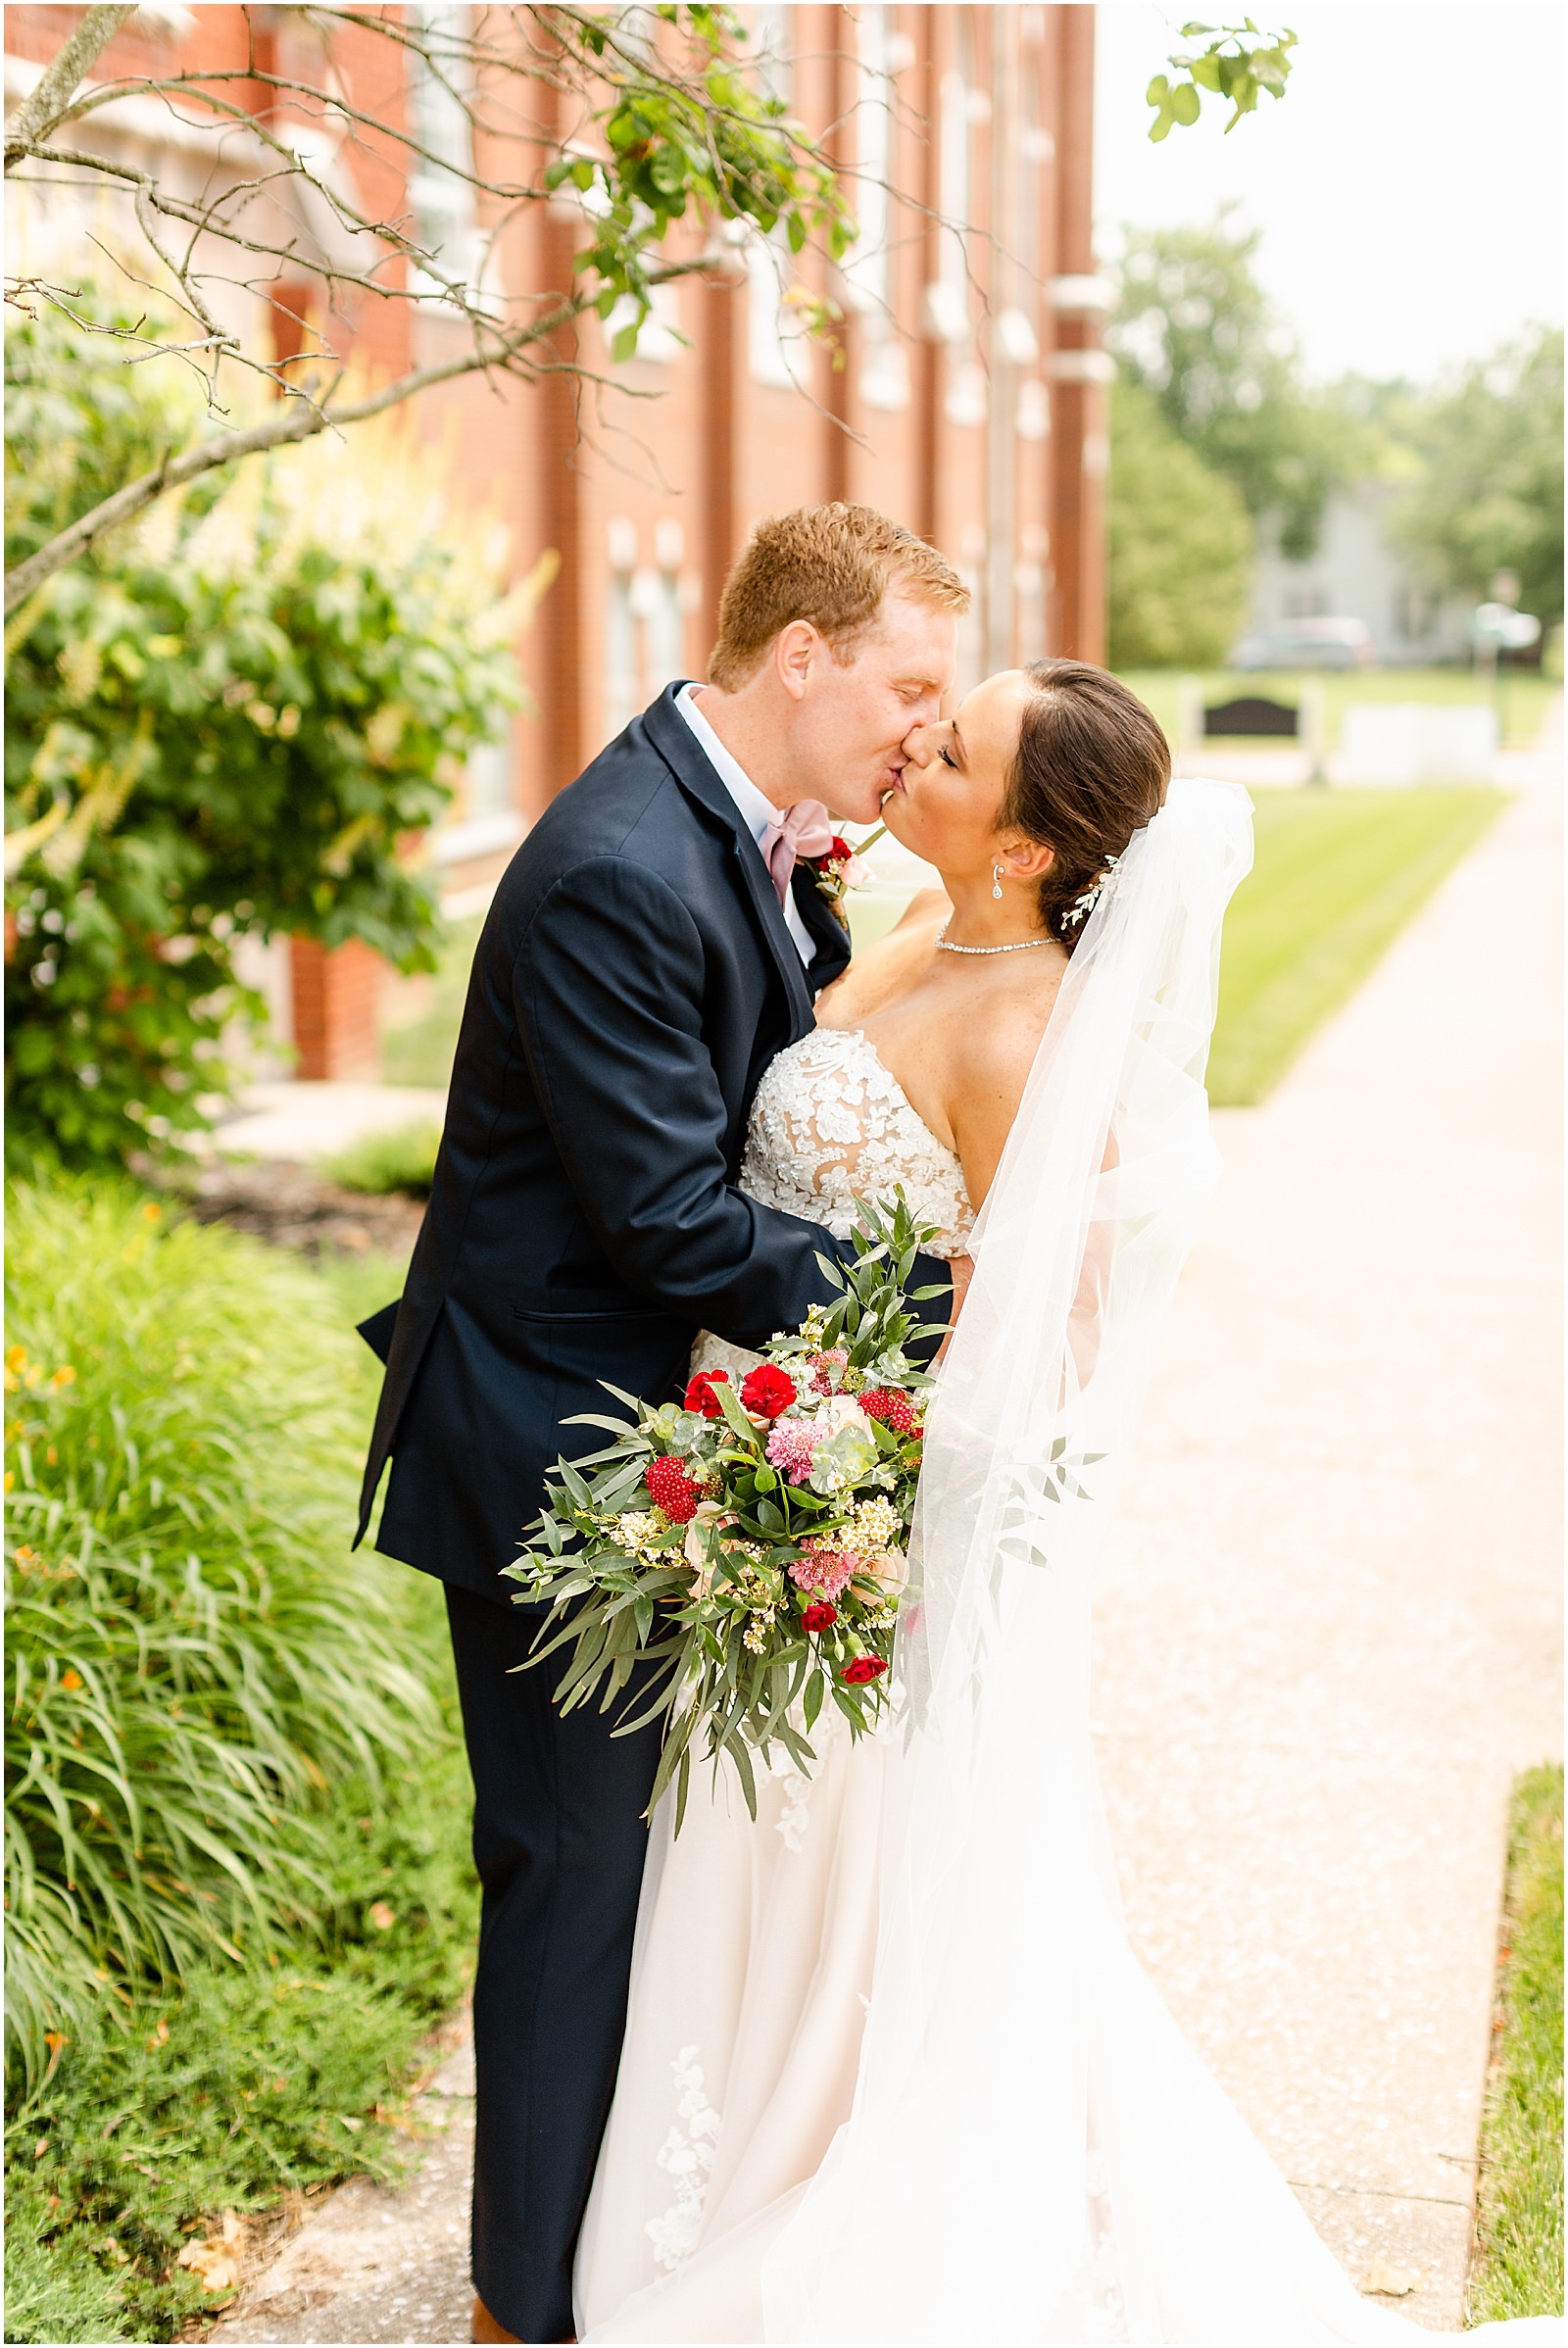 Deidra and Andrew | A Huntingburgh Indiana Wedding Bret and Brandie | Evansville Photographers | @bretandbrandie-0062.jpg